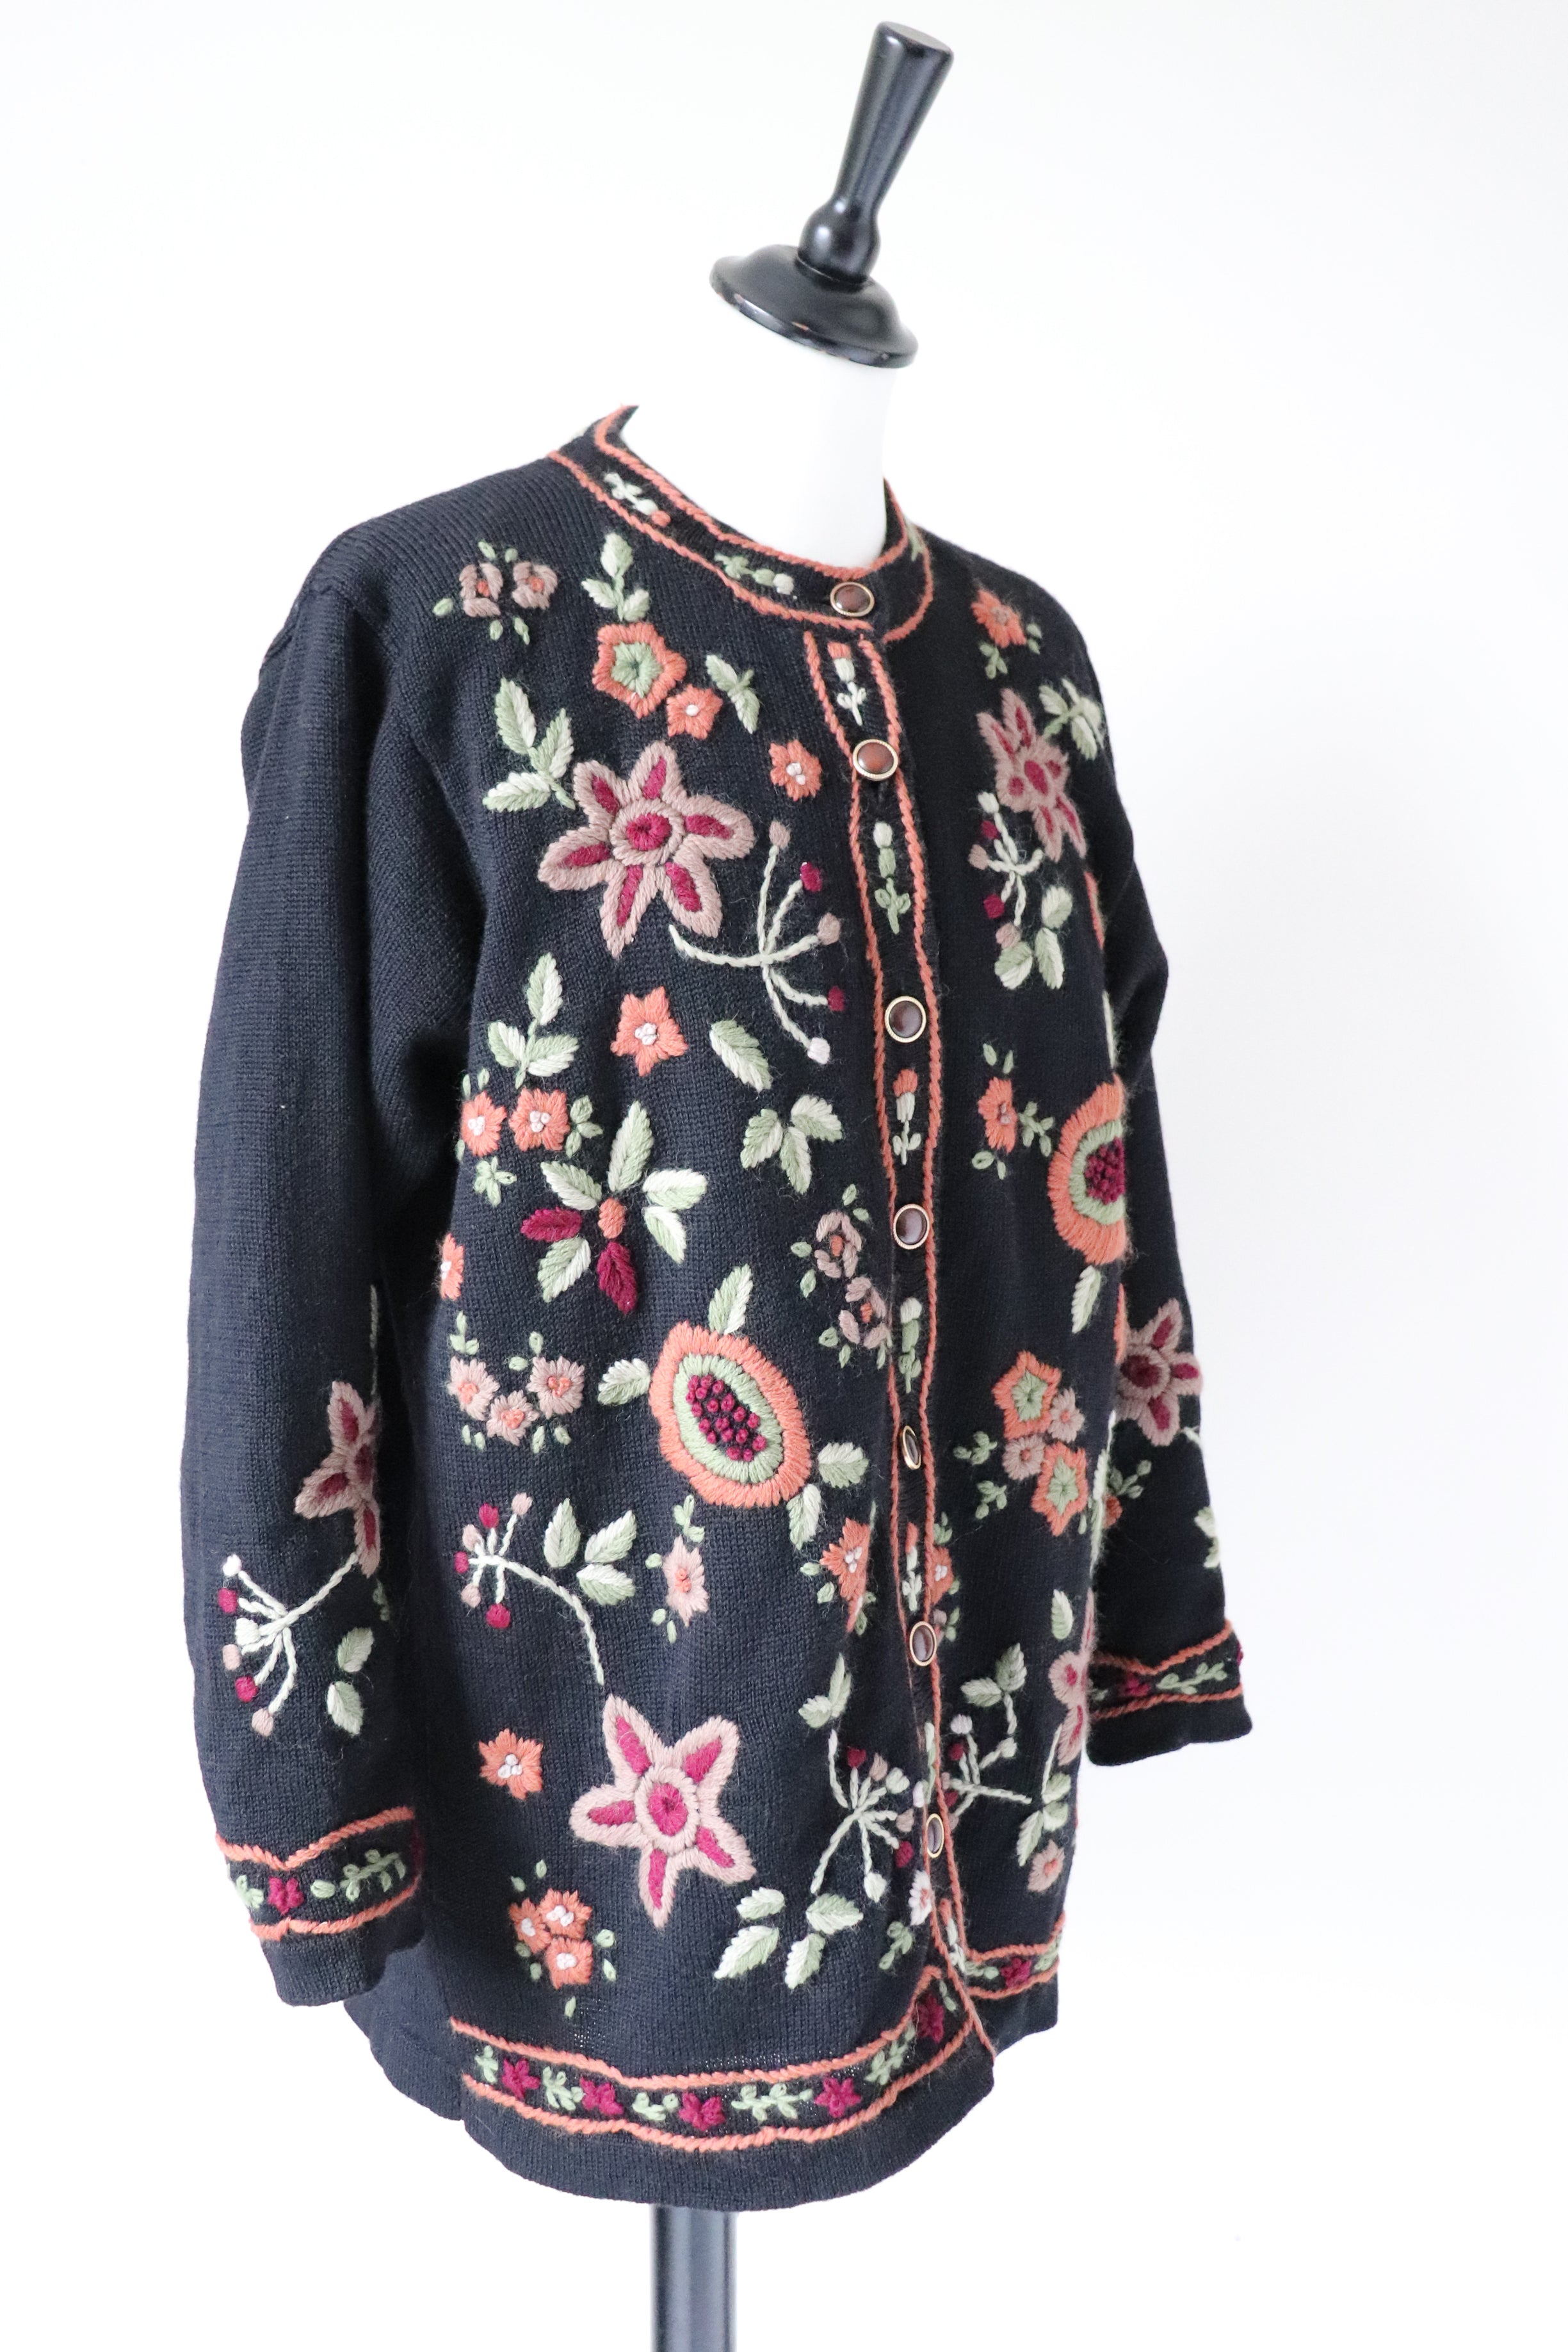 Crewel Work Embroidered Black Cardigan - Wool - Fit M / UK 12